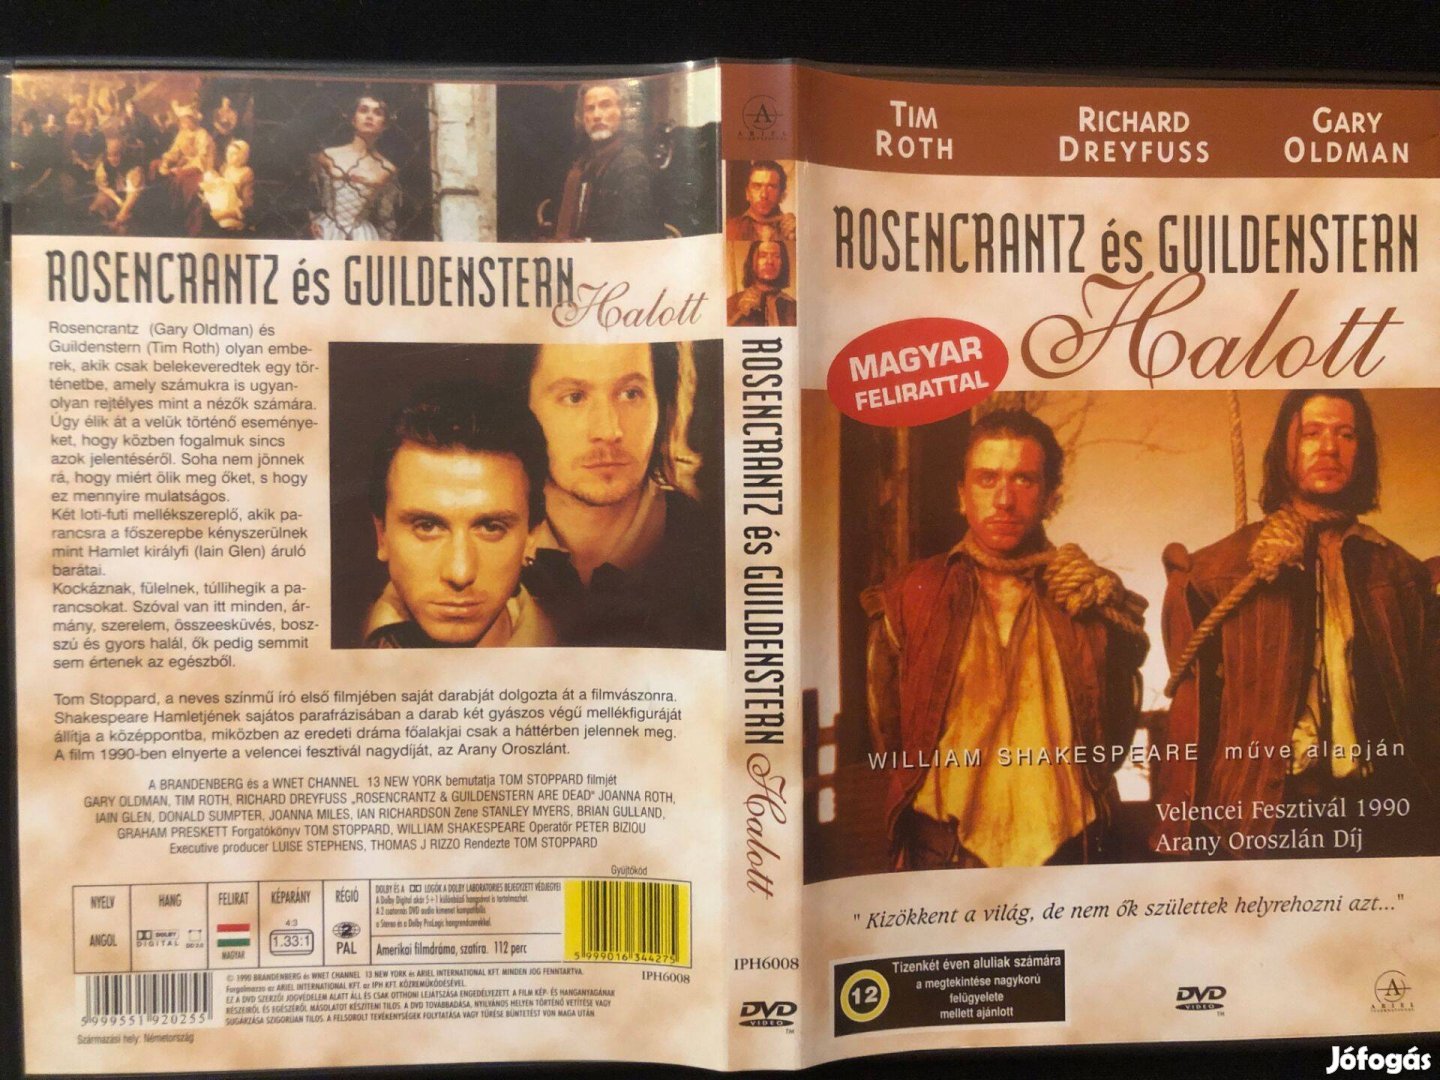 Rosencrantz és Guildenstern halott DVD (karcmentes, Tim Roth)